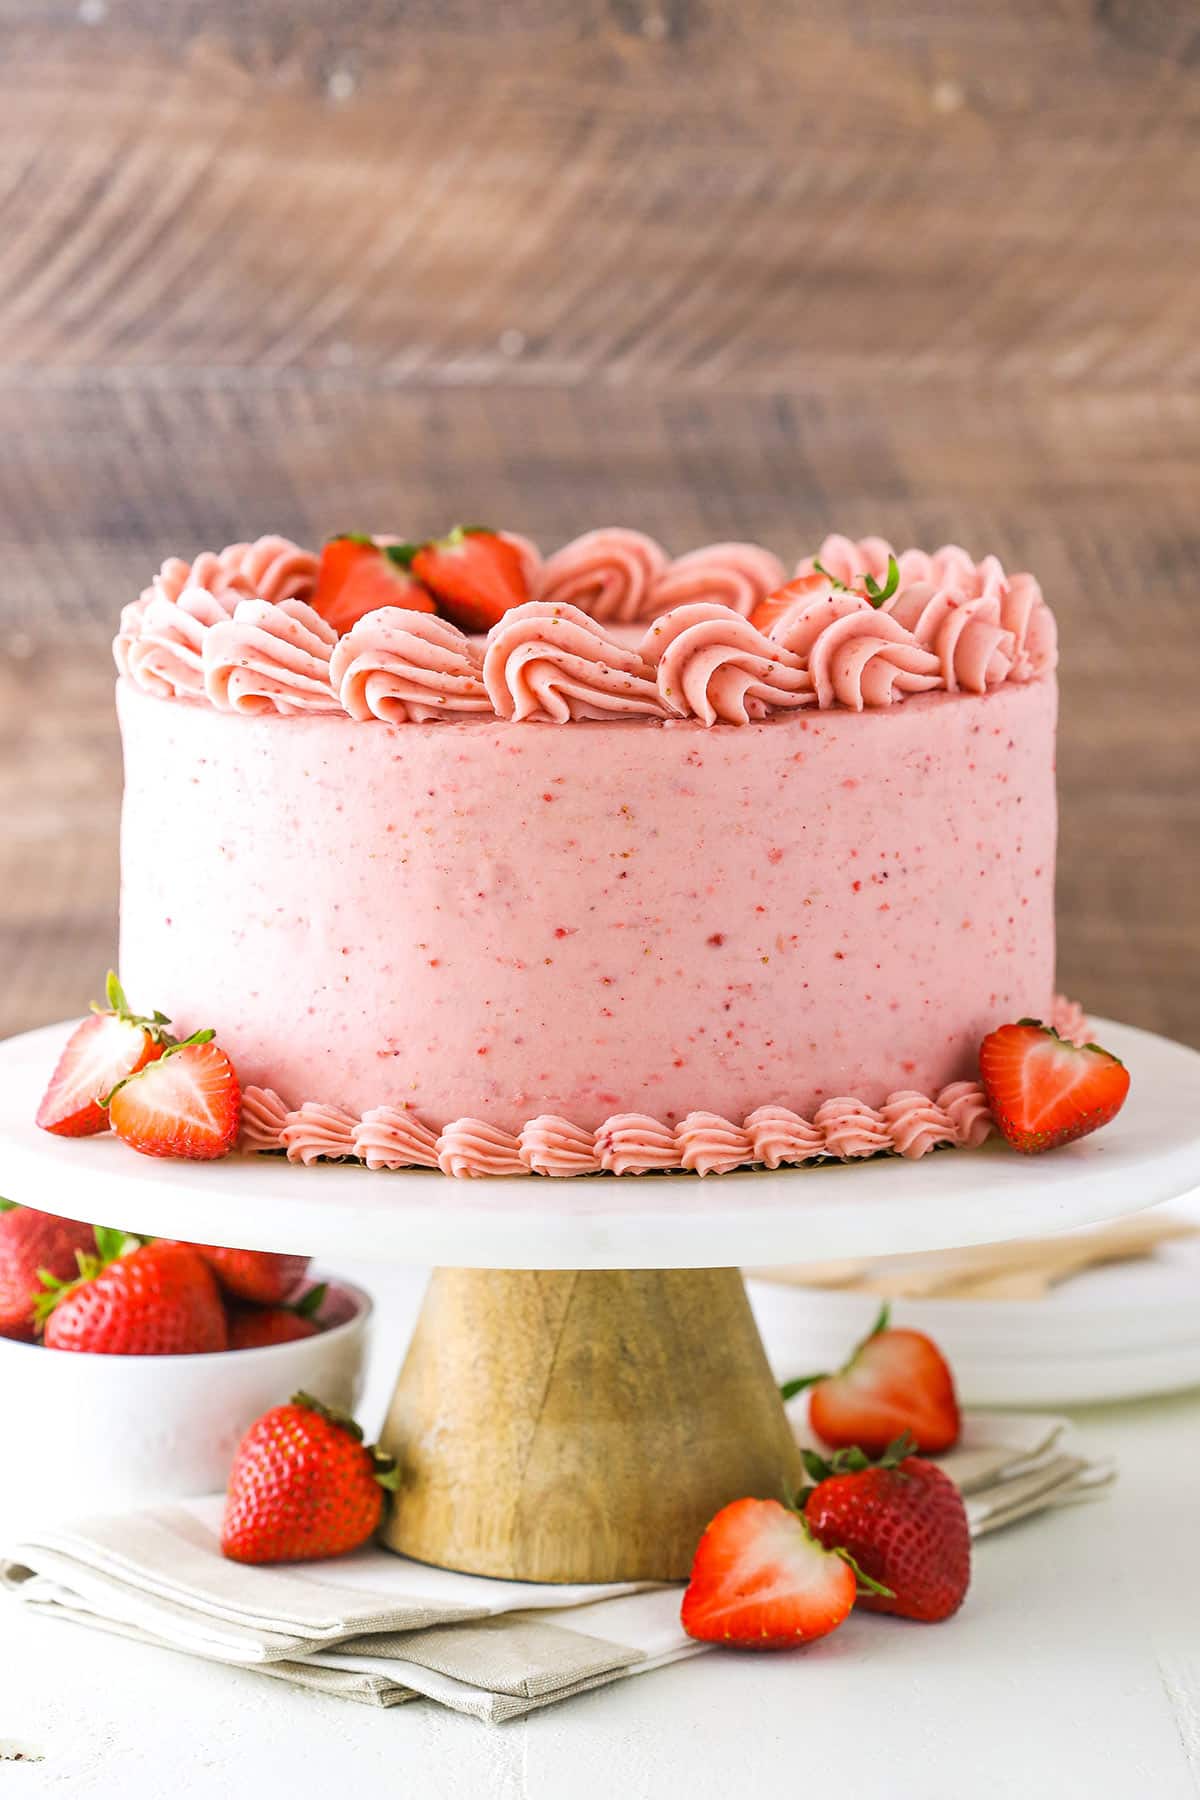 Homemade strawberry cake on a cake stand near fresh strawberries.